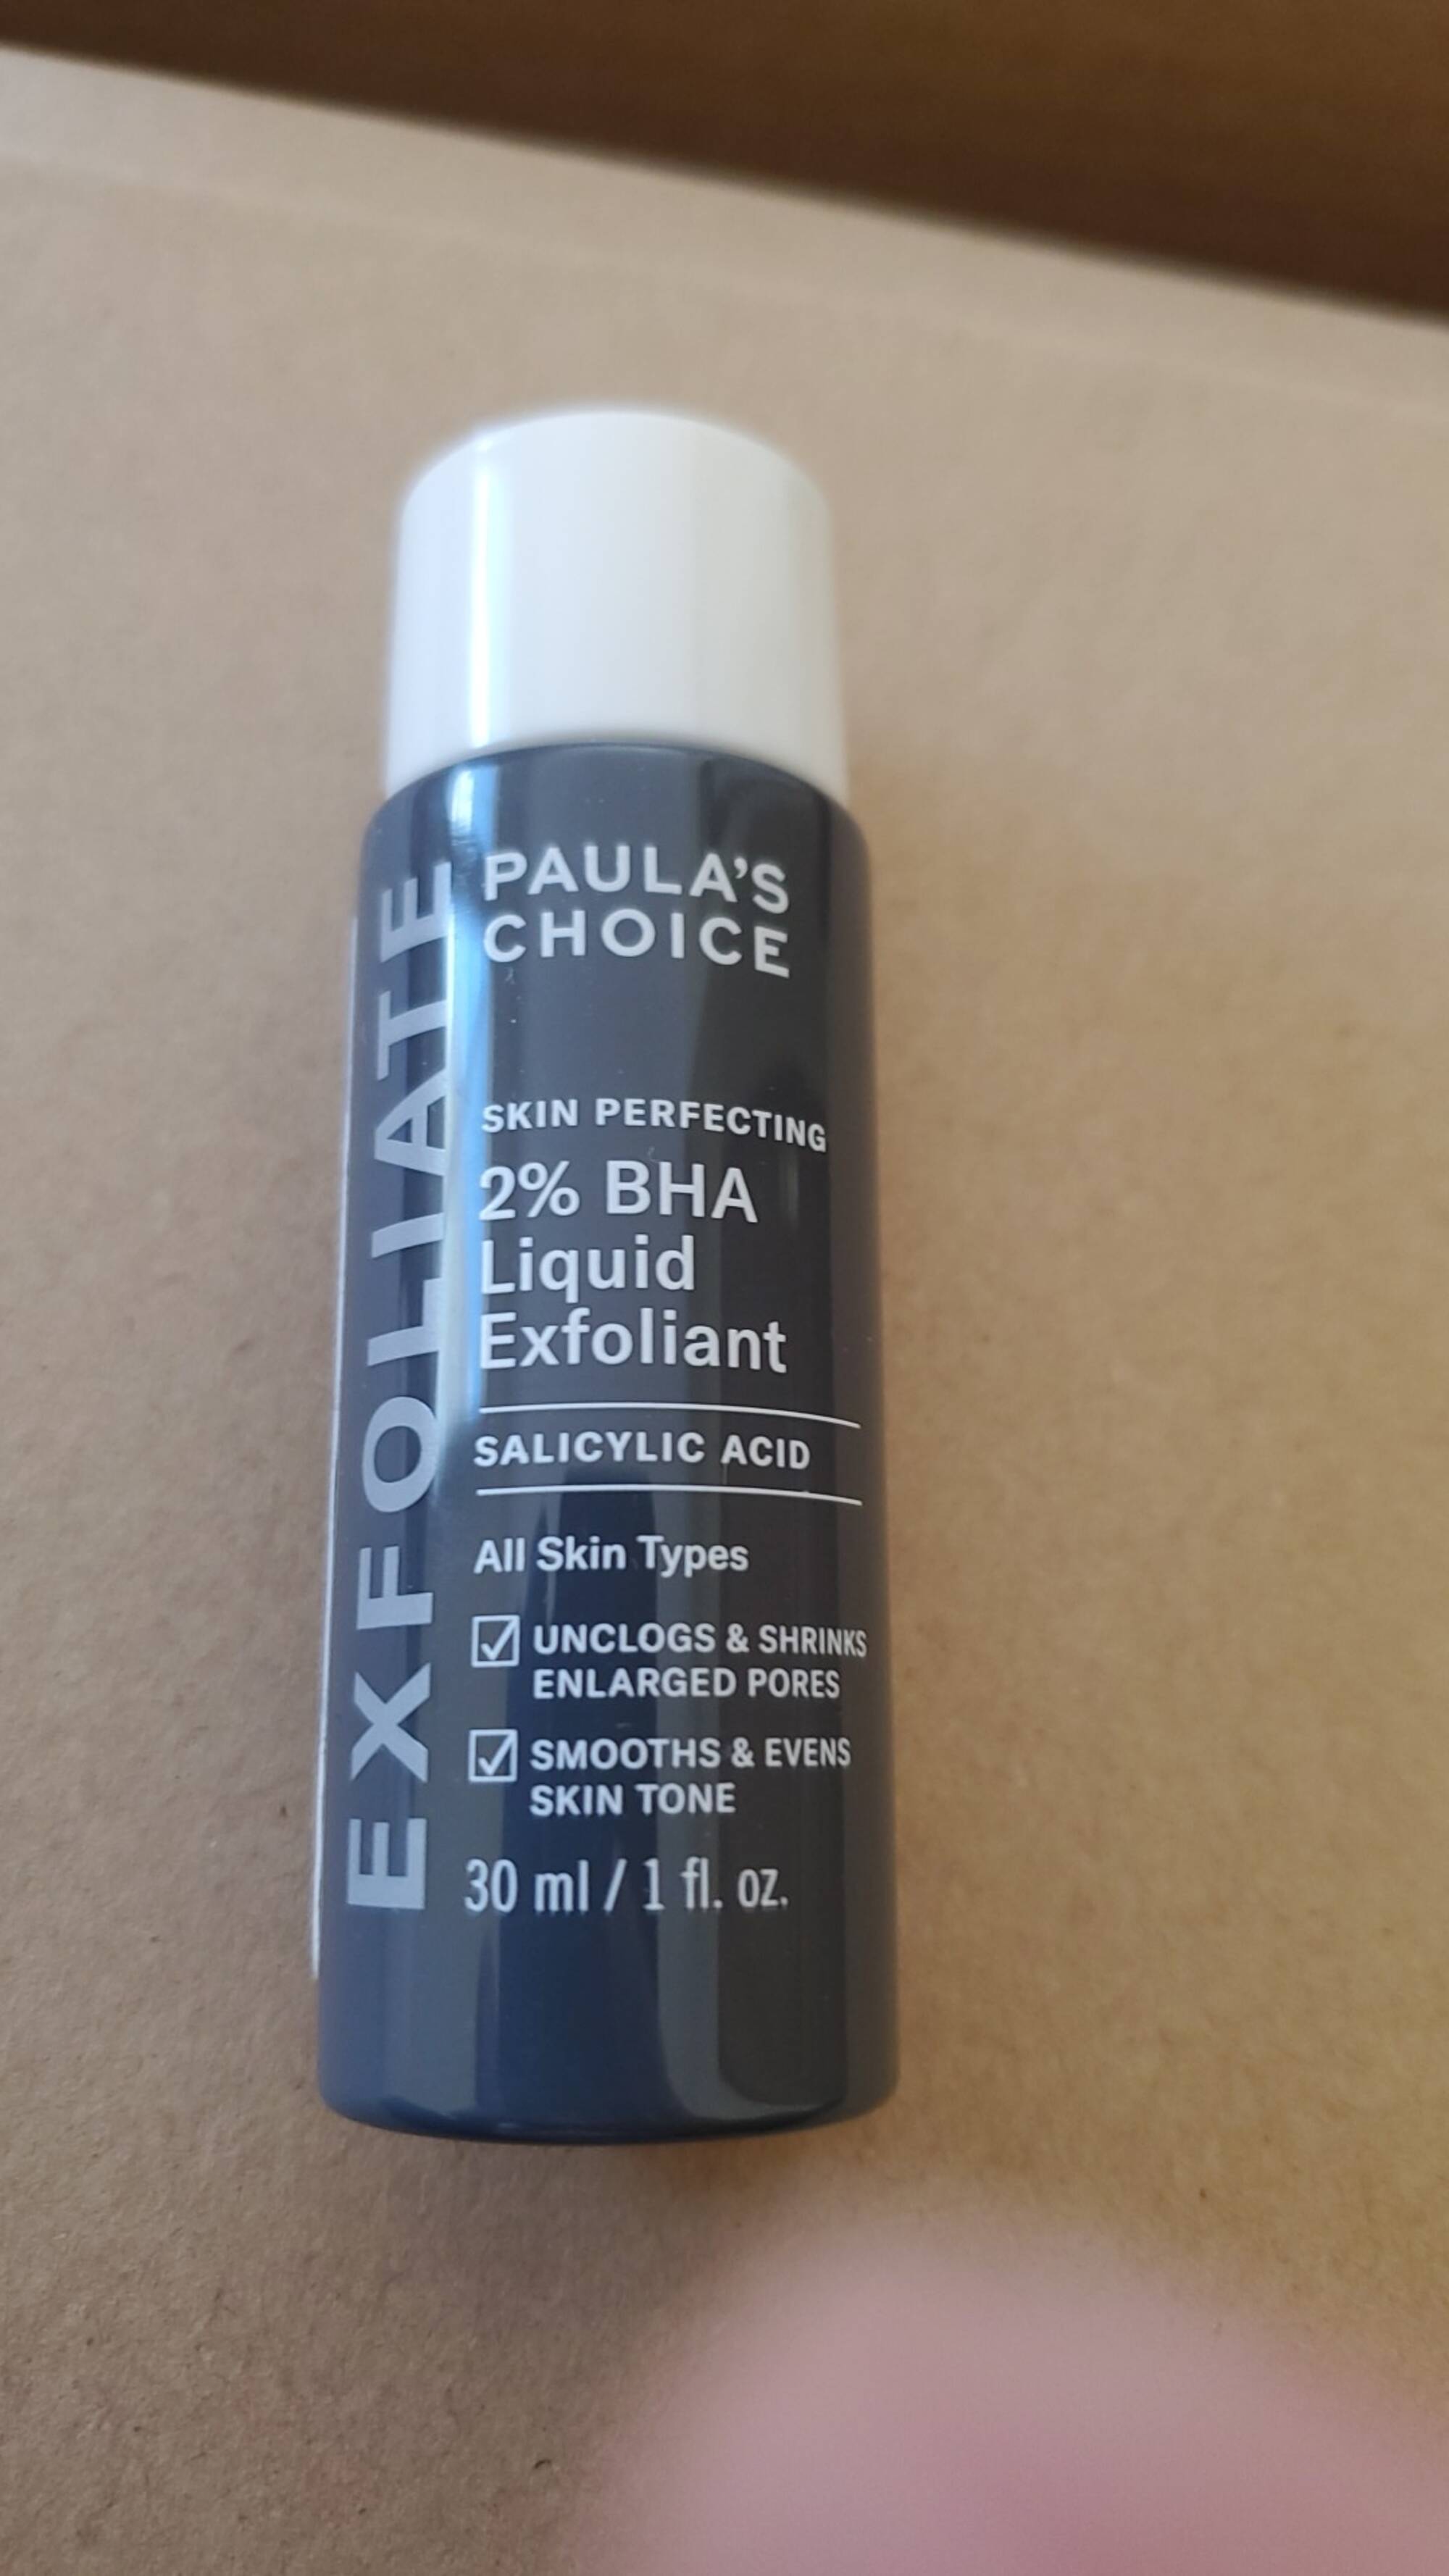 PAULA'S CHOICE - 2% BHA liquid exfoliant